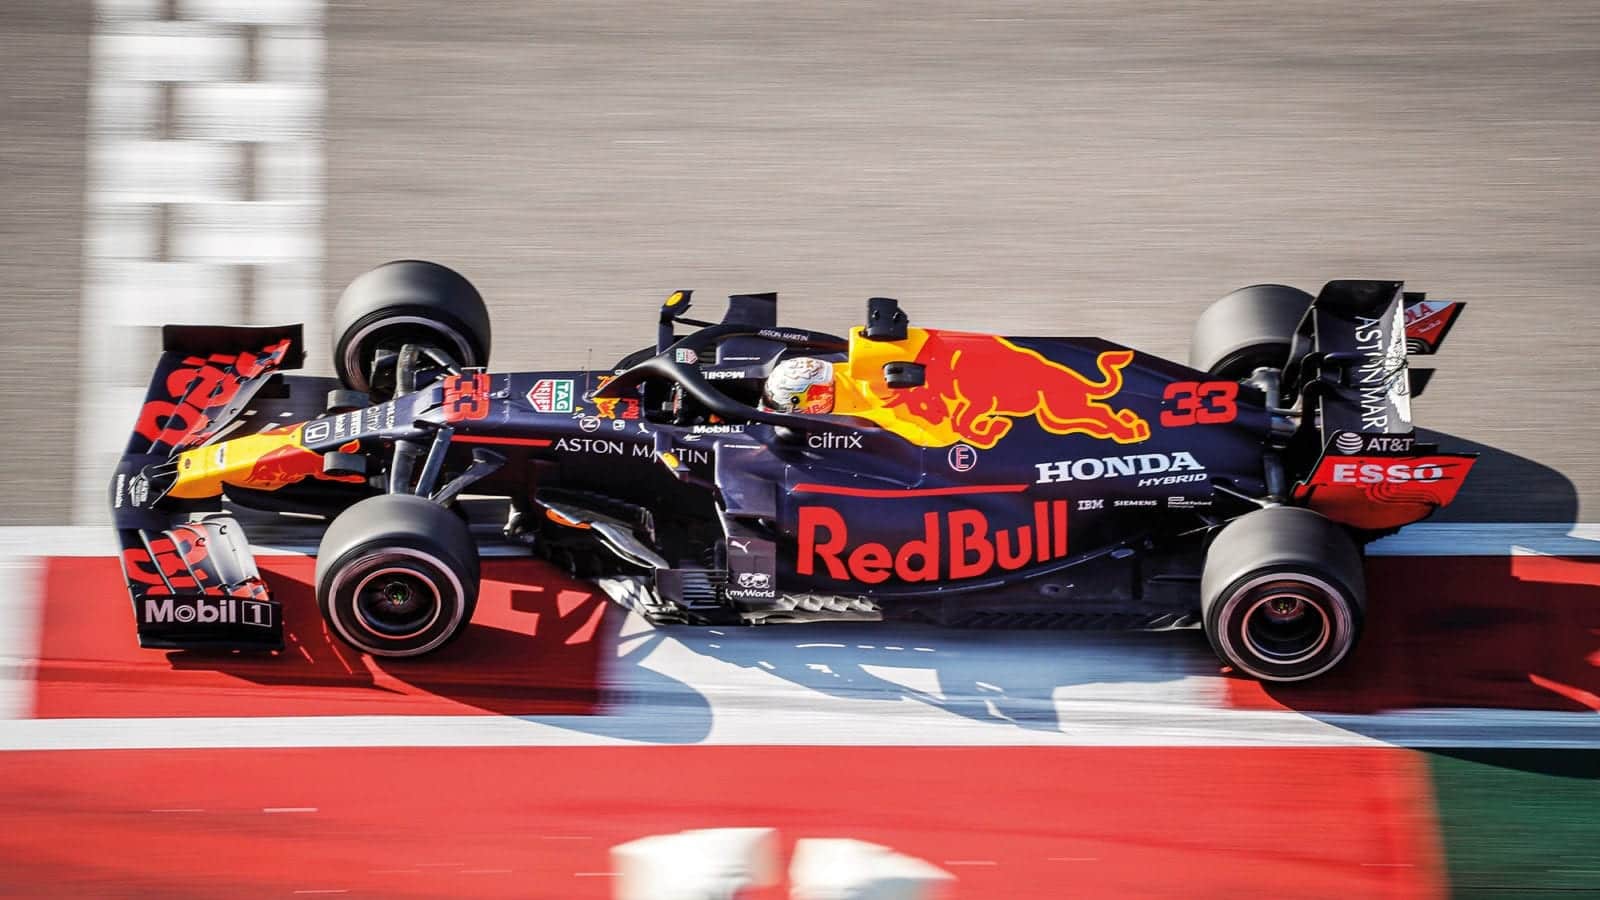 Max Verstappen in the 2020 Red Bull F1 car